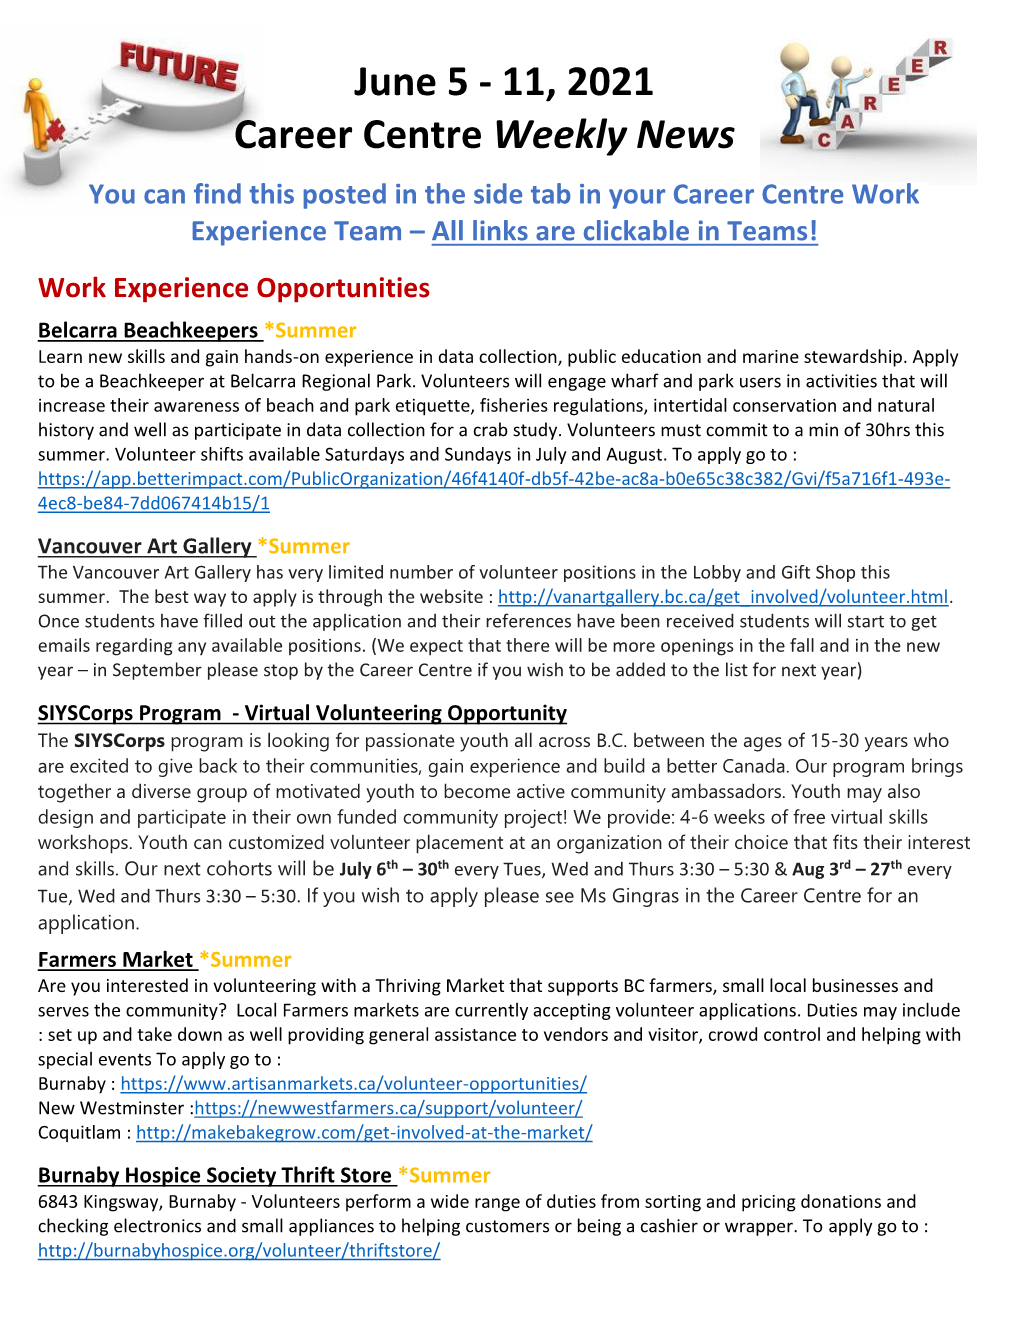 Career Centre News: June 5-11, 2021